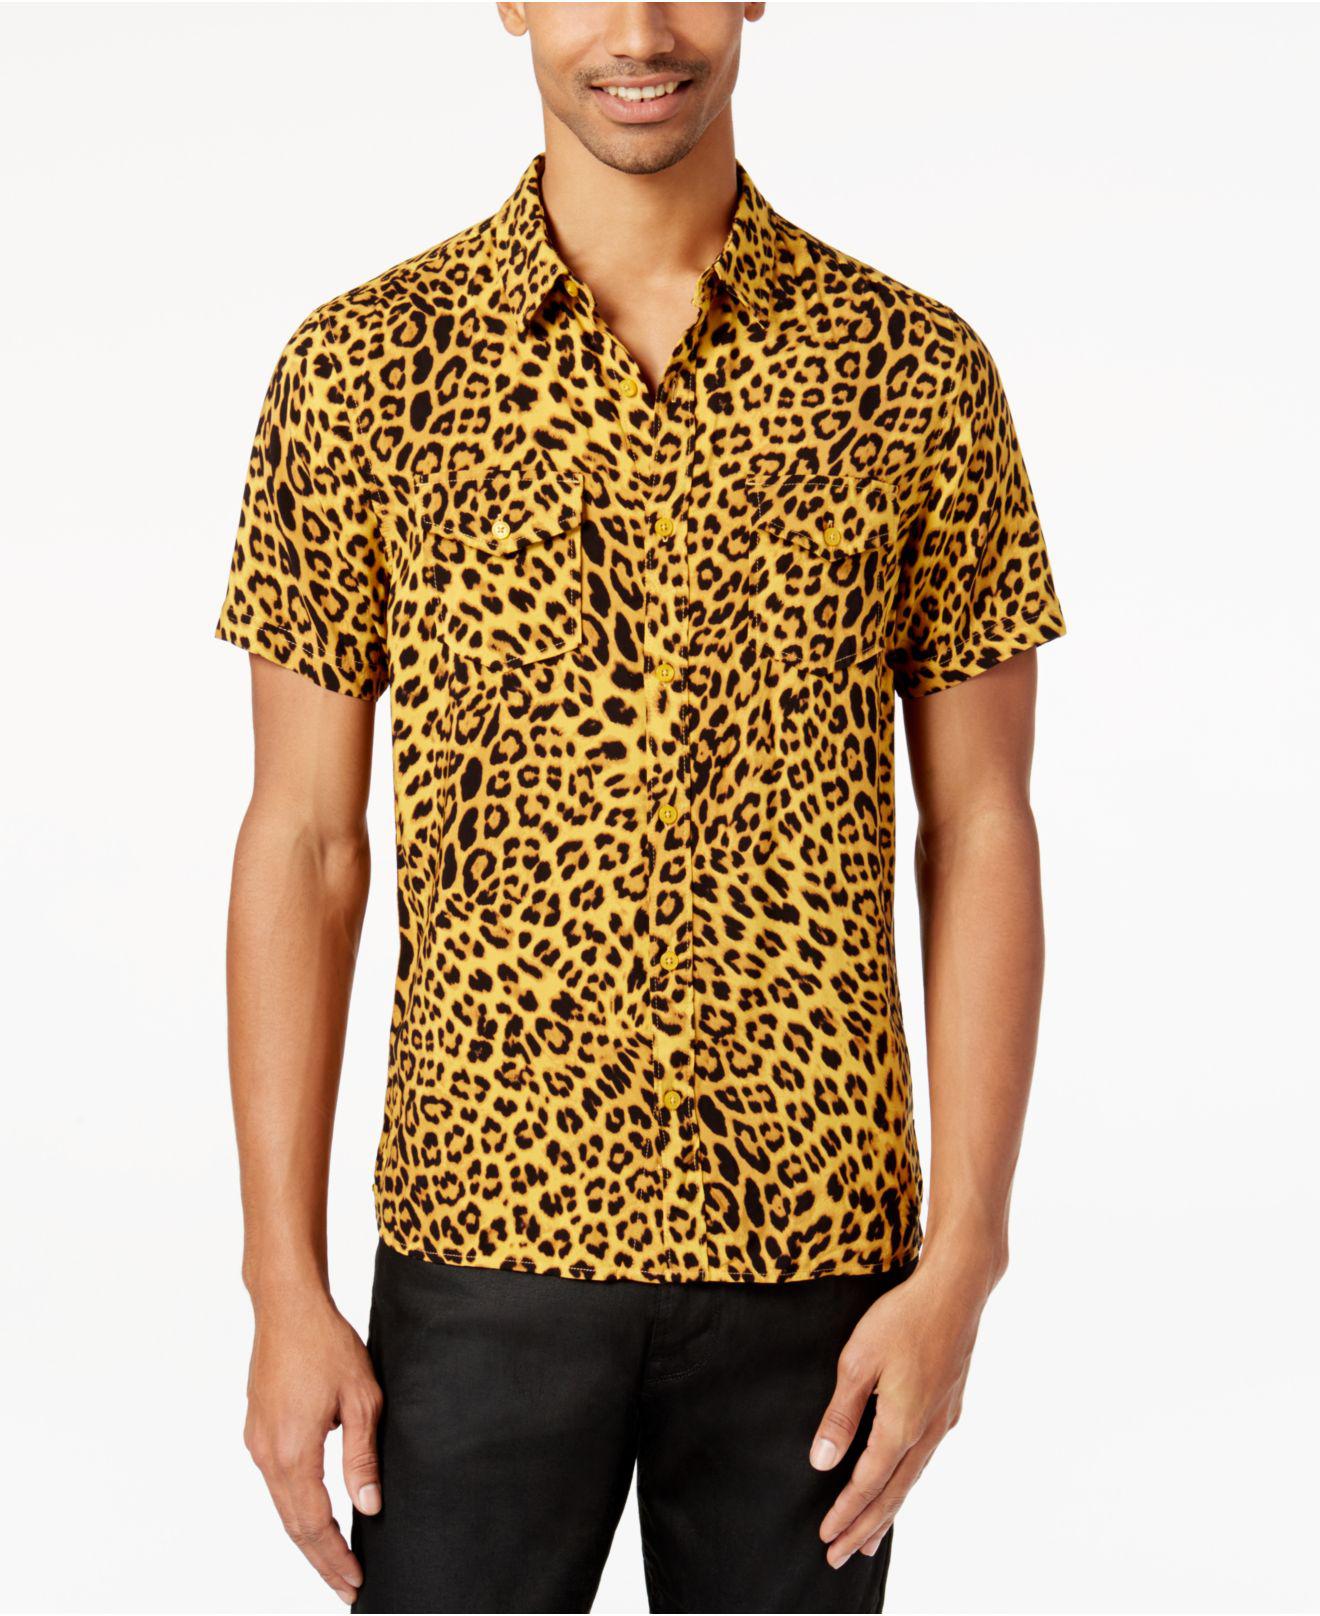 Leopard Skin Shirt | peacecommission.kdsg.gov.ng